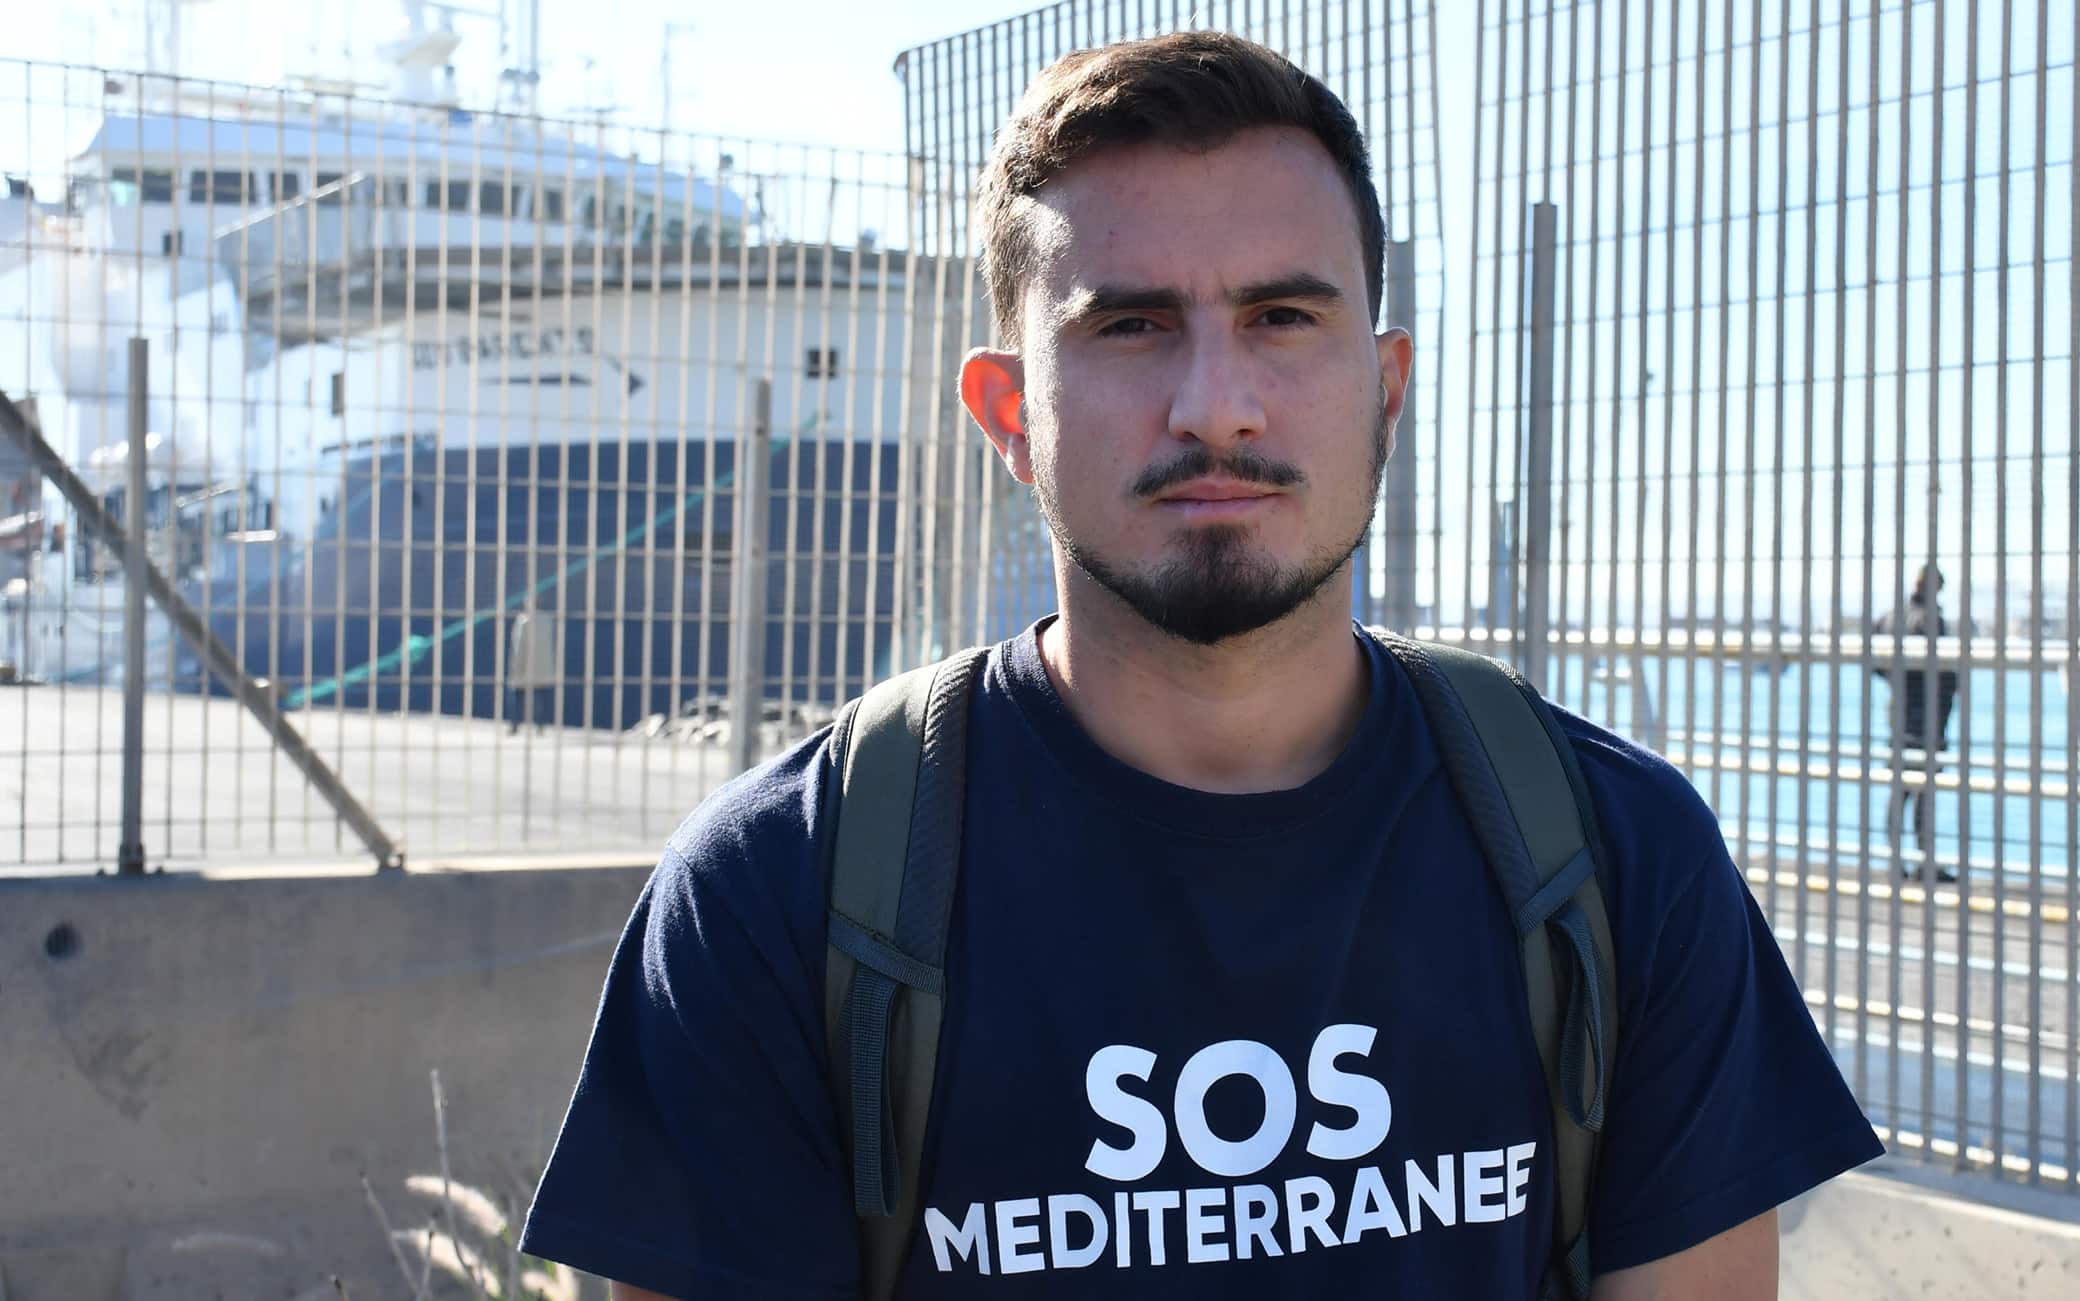 Francesco Creazzo, spokesman of Sos Mediterranee, the ship berthed in the port of Catania, 7 November 2022. ANSA/ORIETTA SCARDINO